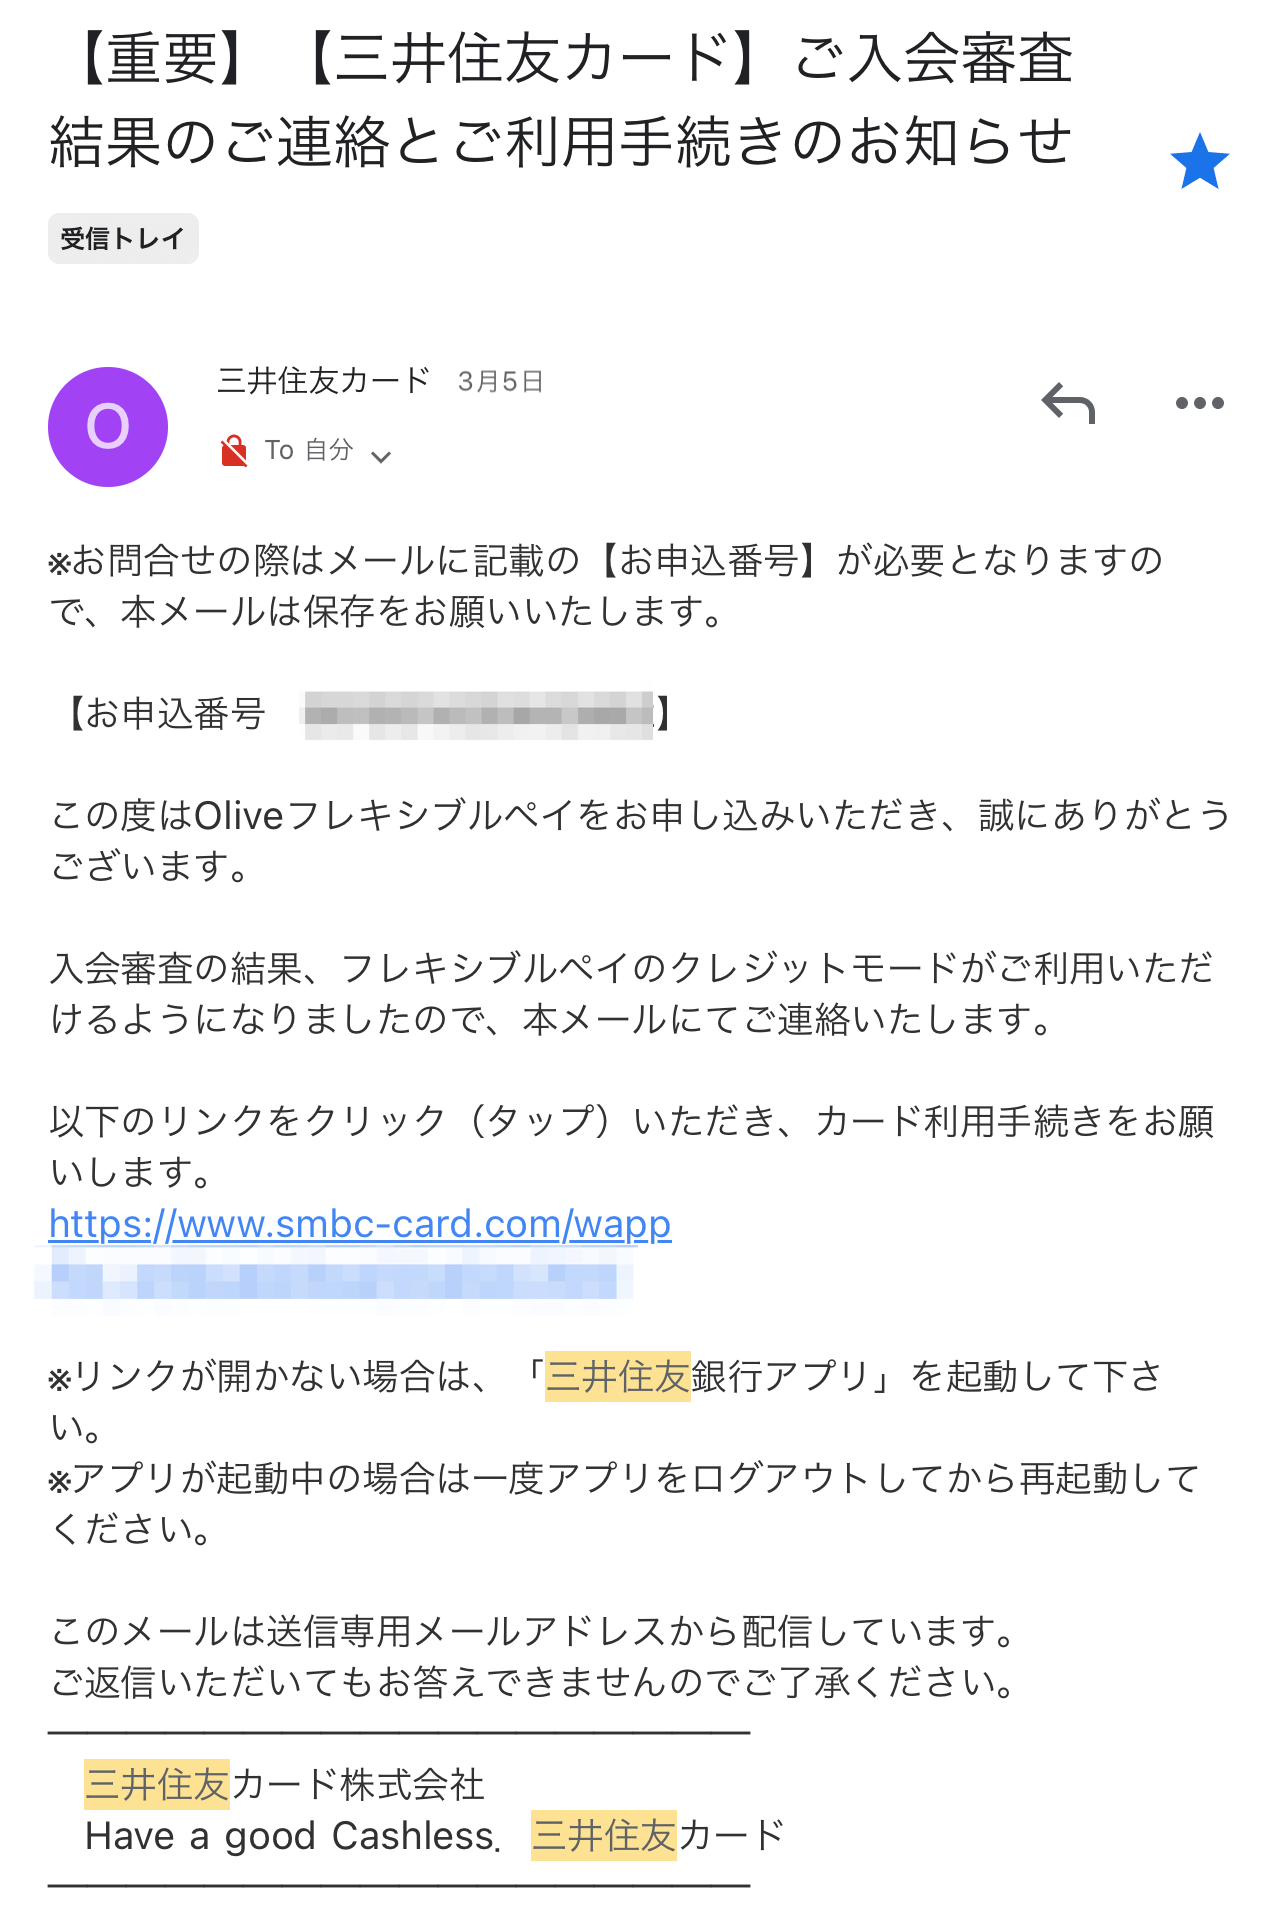 Oliveフレキシブルペイ審査通過連絡メール